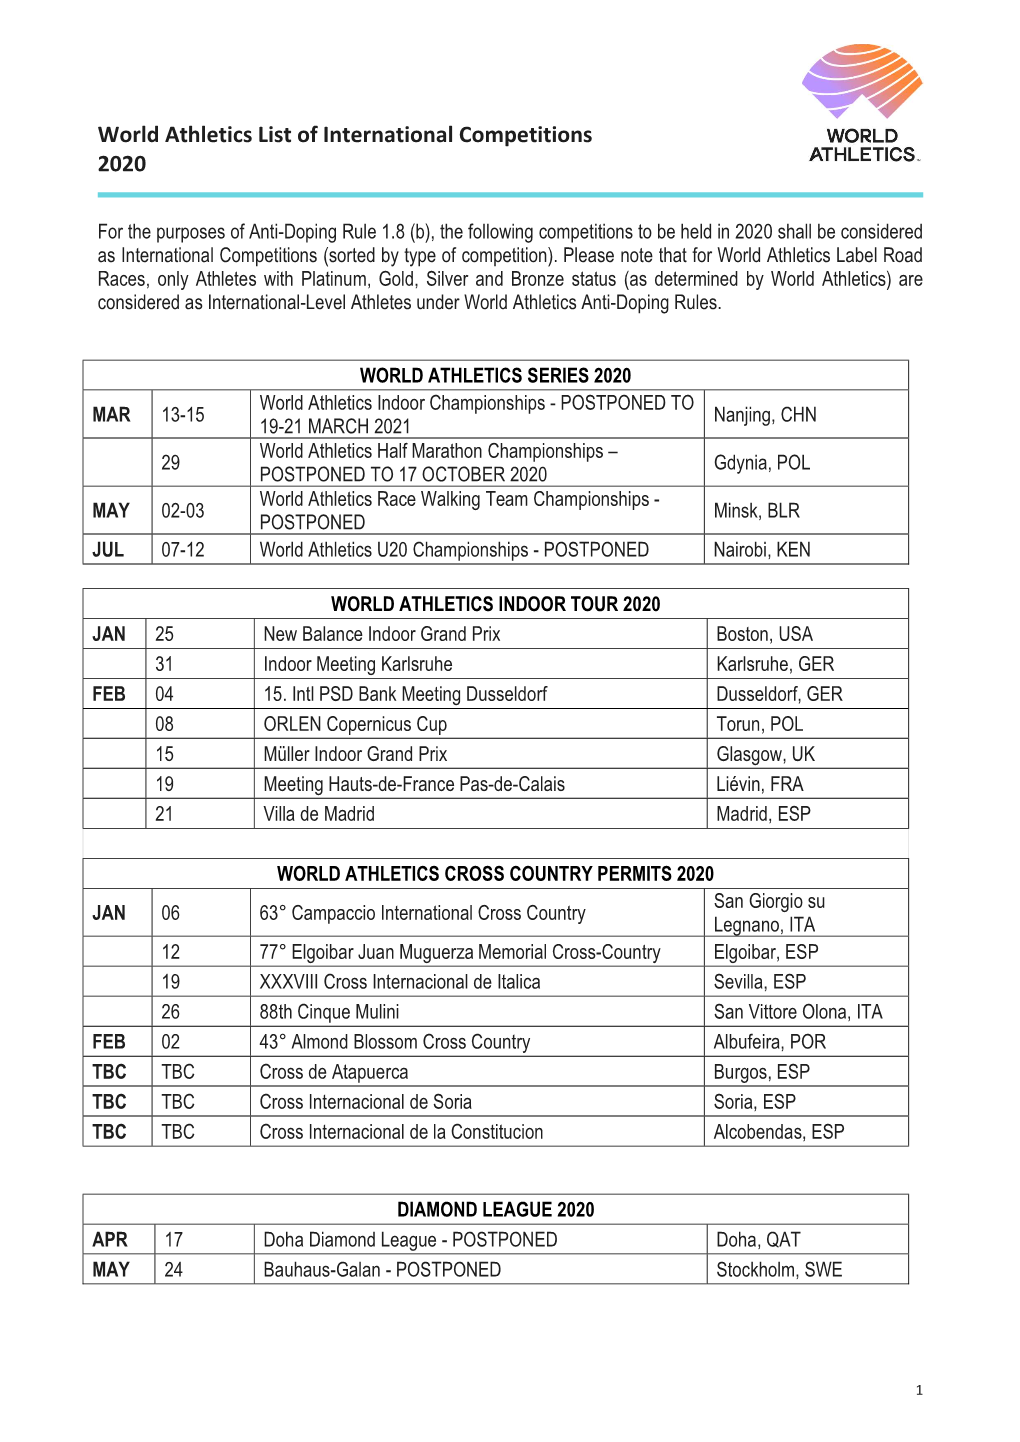 World Athletics List of International Competitions 2020